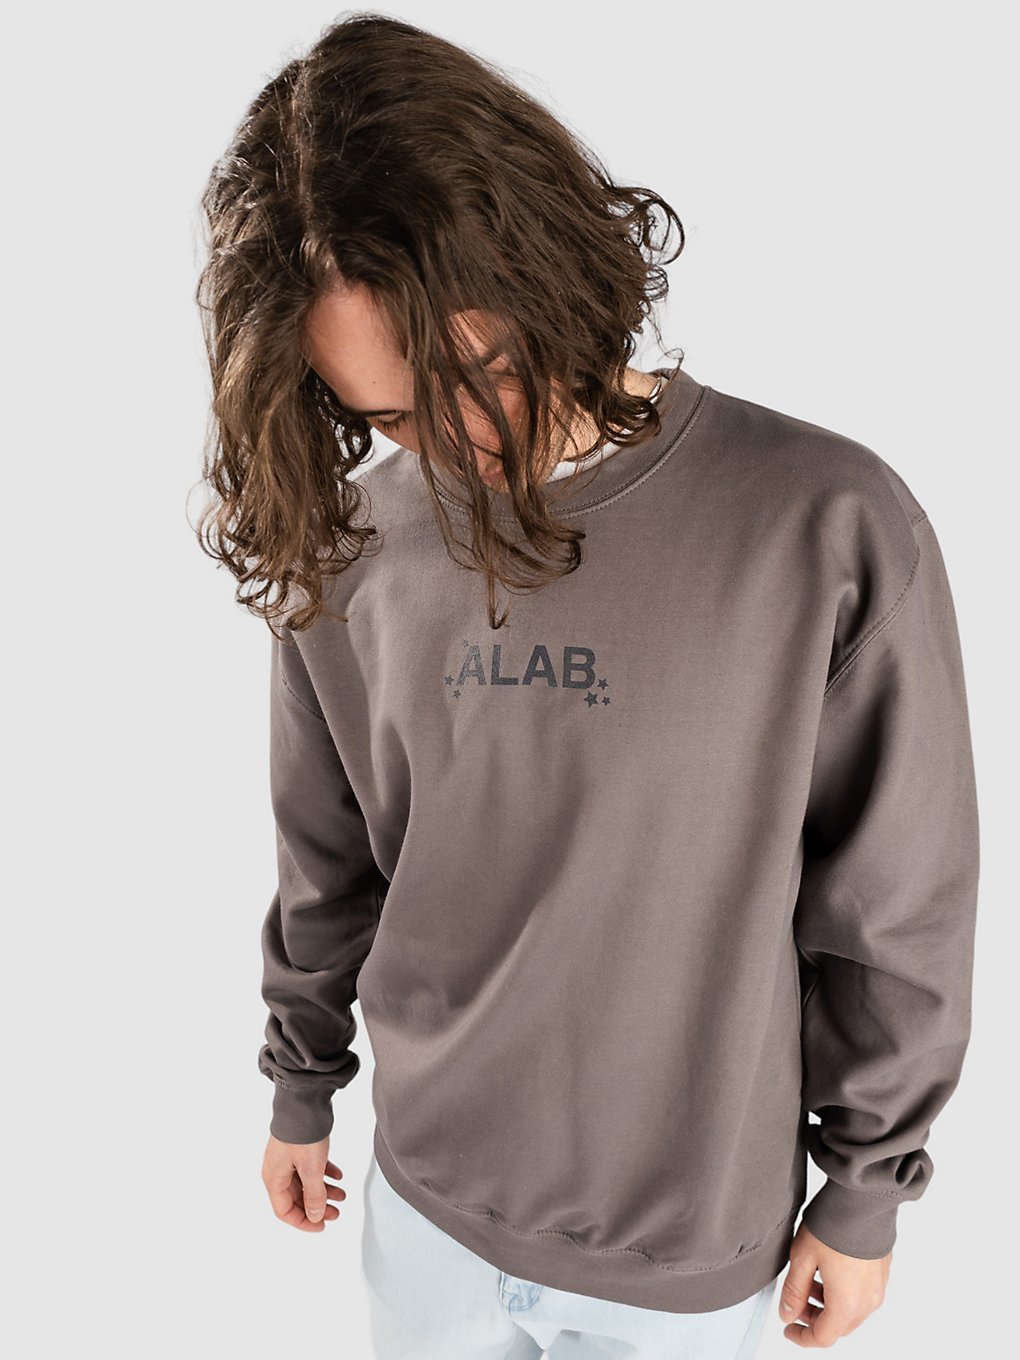 A.Lab Hate Stinks Sweater gray kaufen